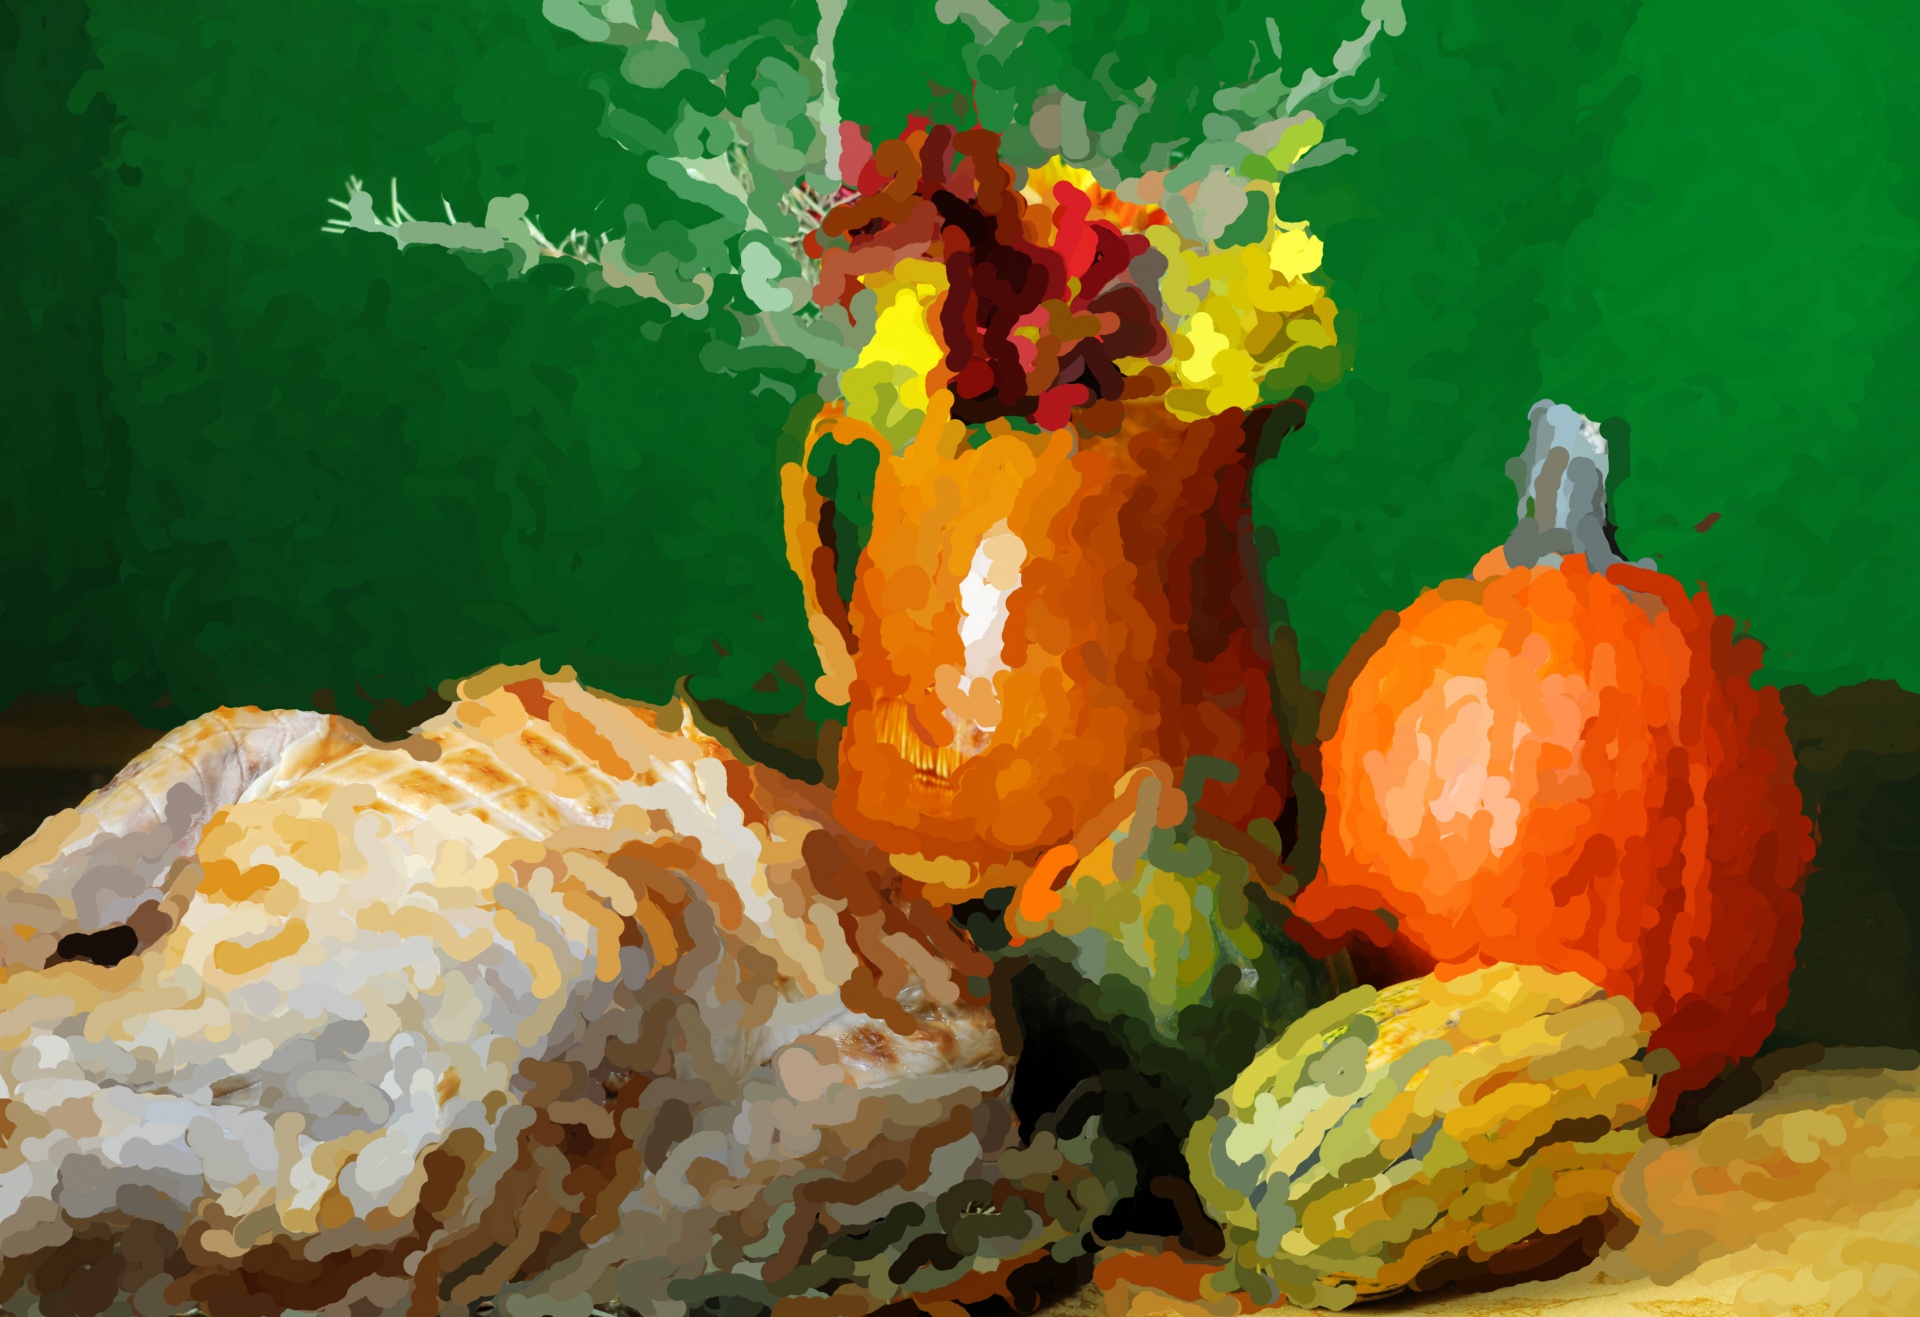 Thanksgiving,dinner,turkey,painted,painterly - free image from needpix.com